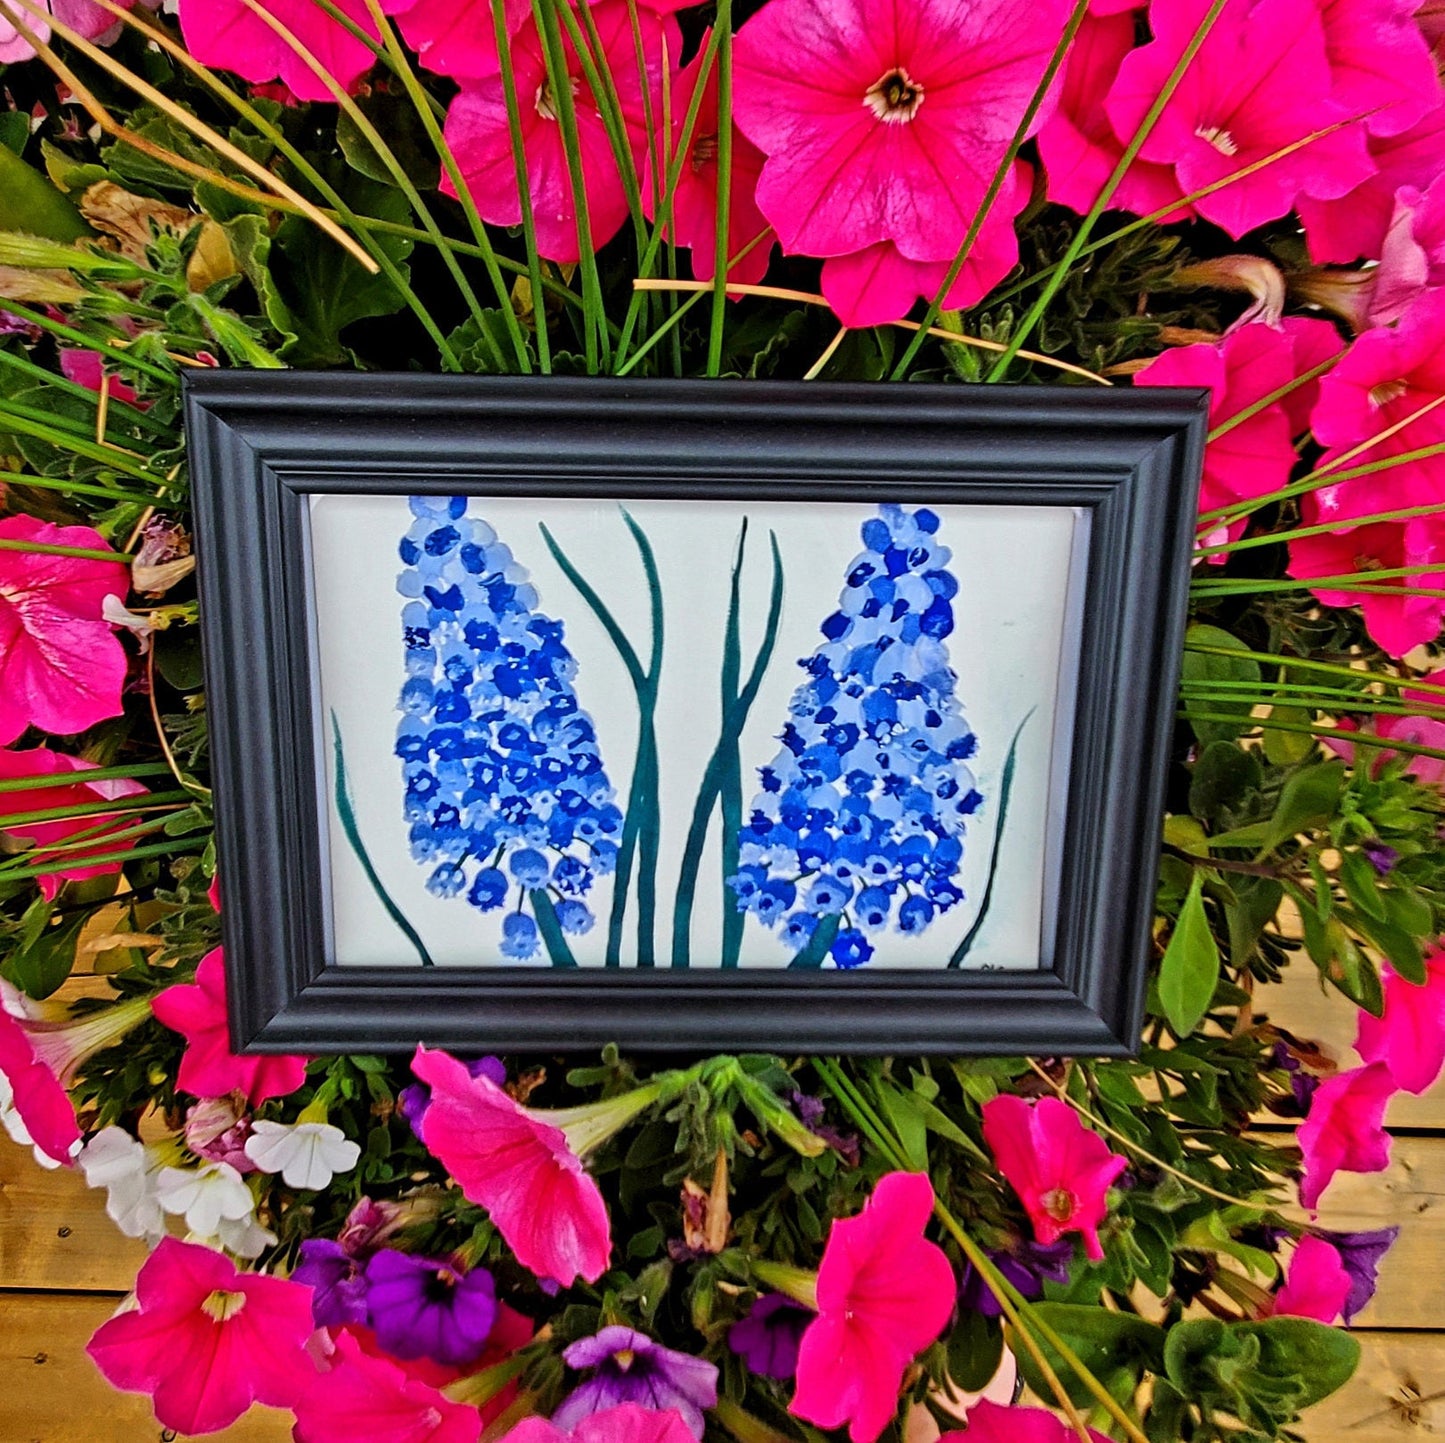 Grape Hyacinth Flower Framed Painting